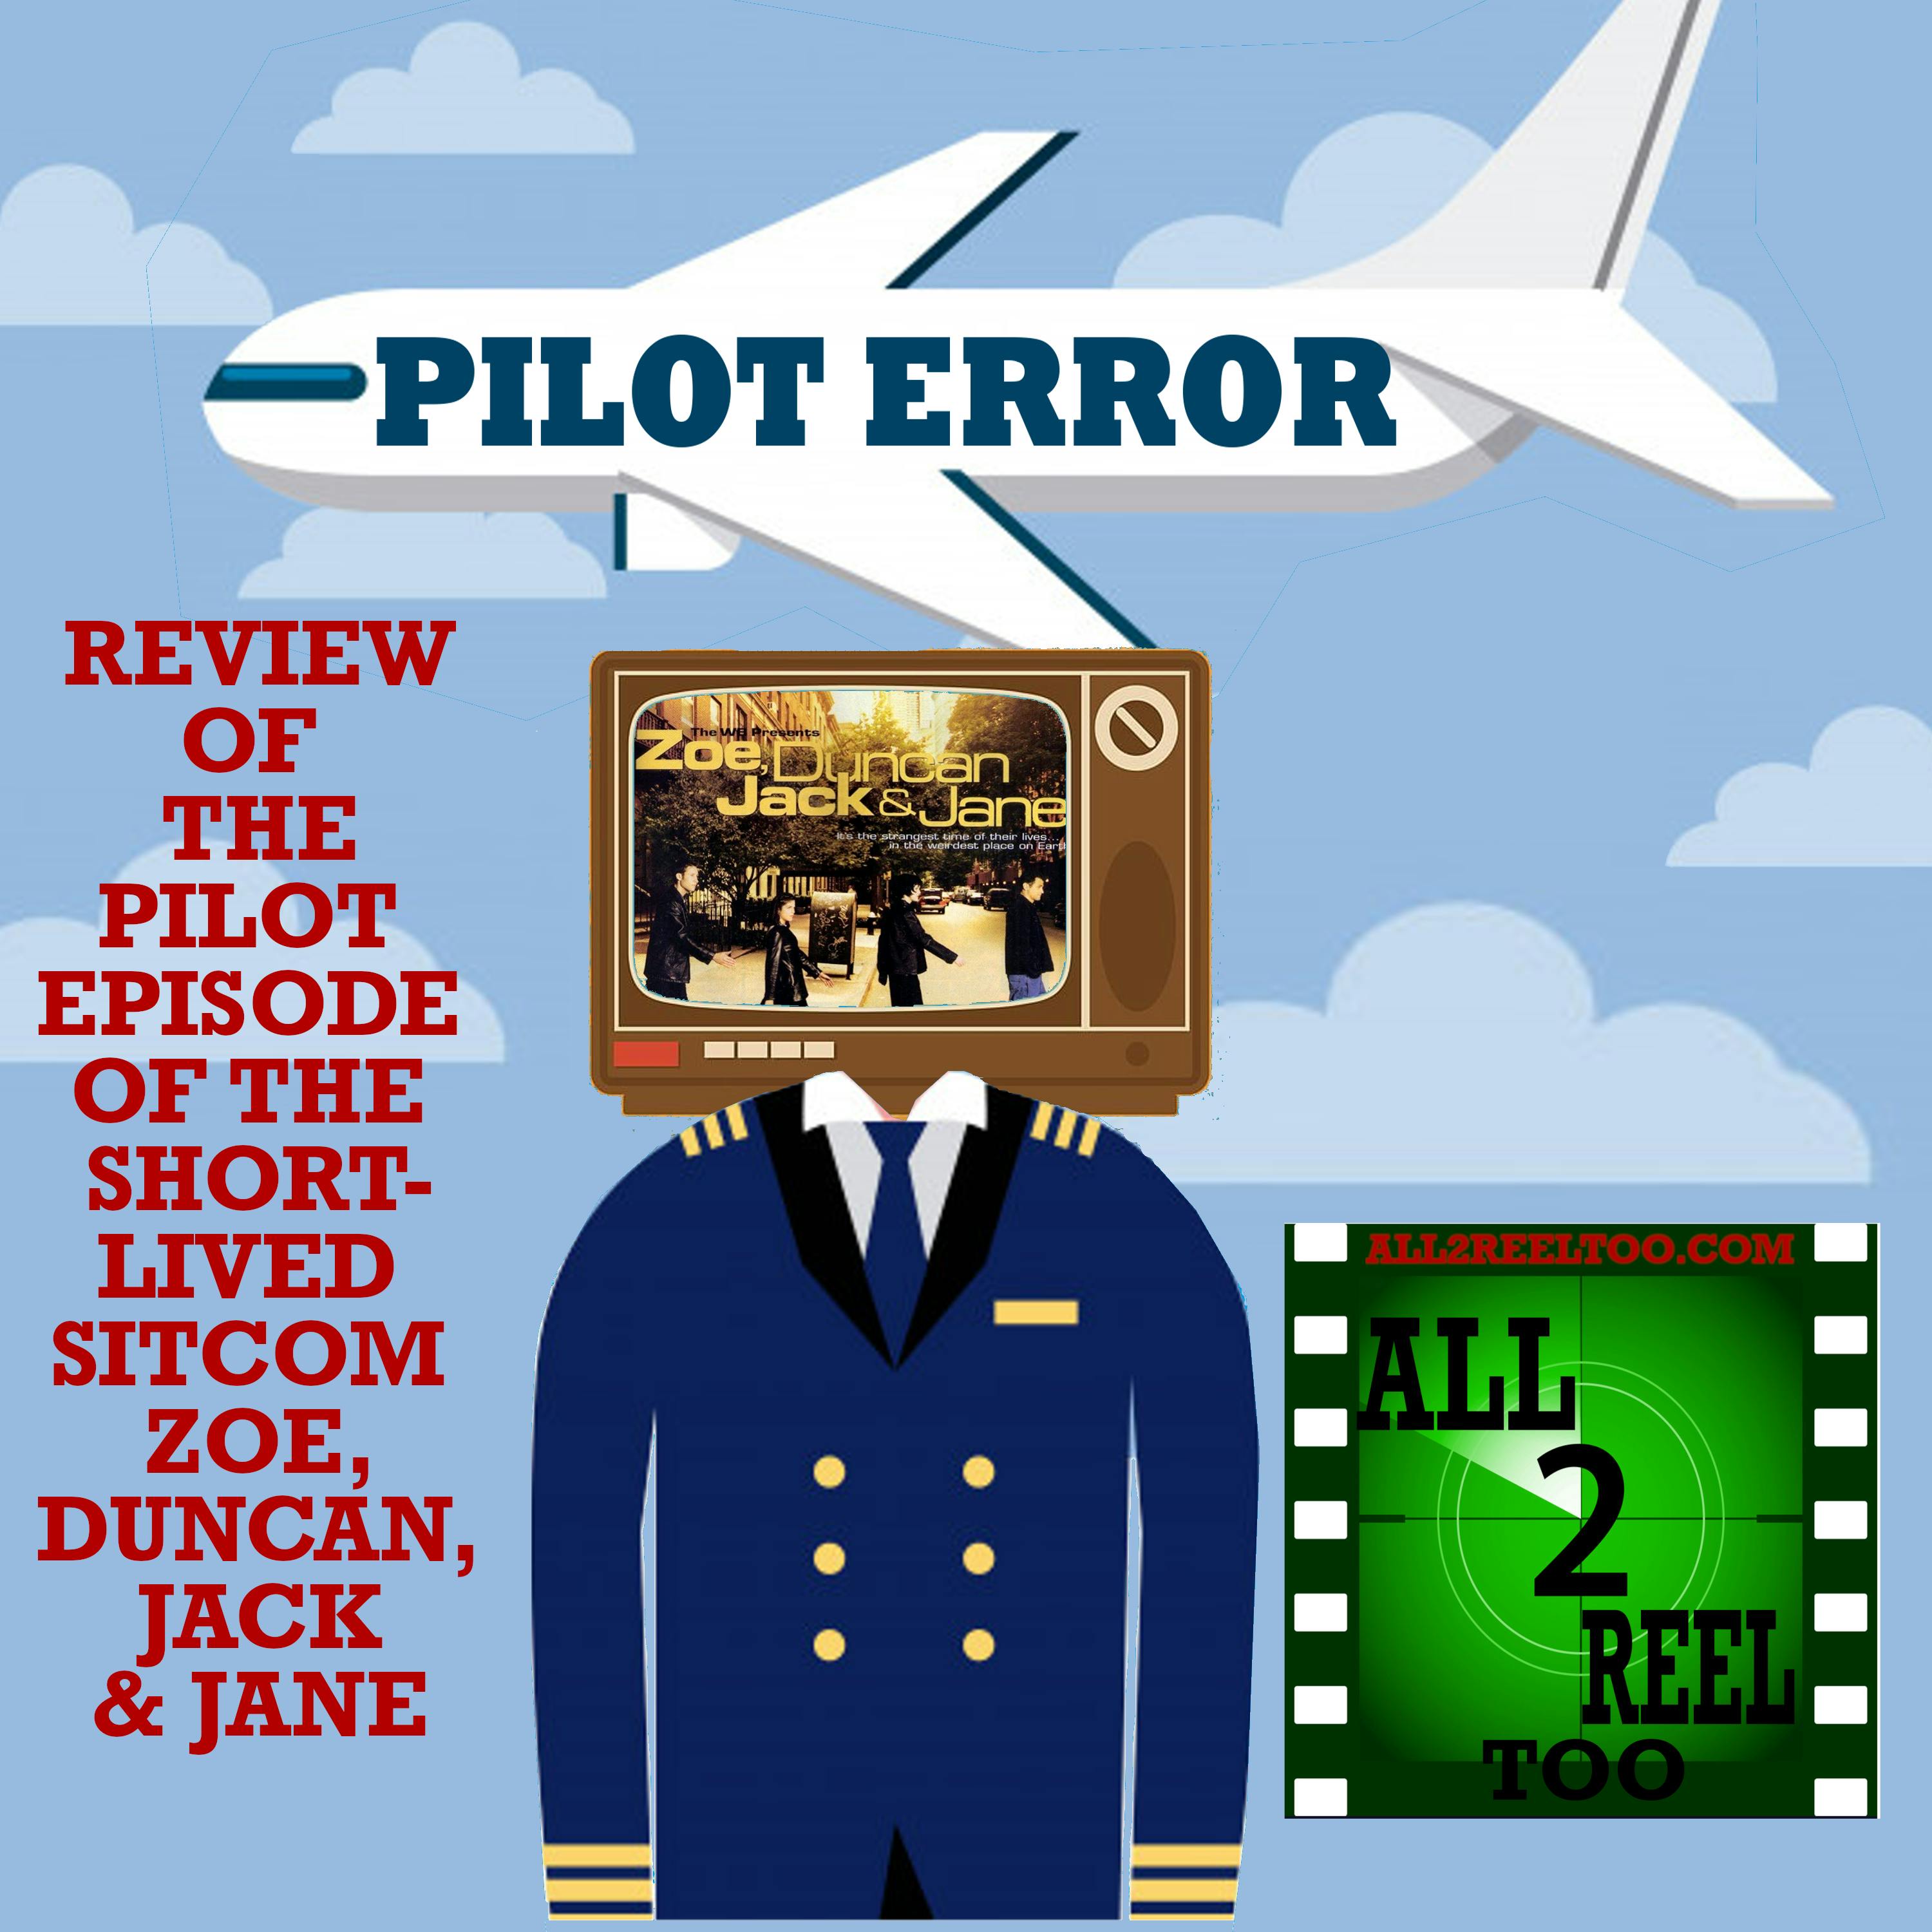 Zoe, Duncan, Jack & Jane (1999) - PILOT ERROR REVIEW Image